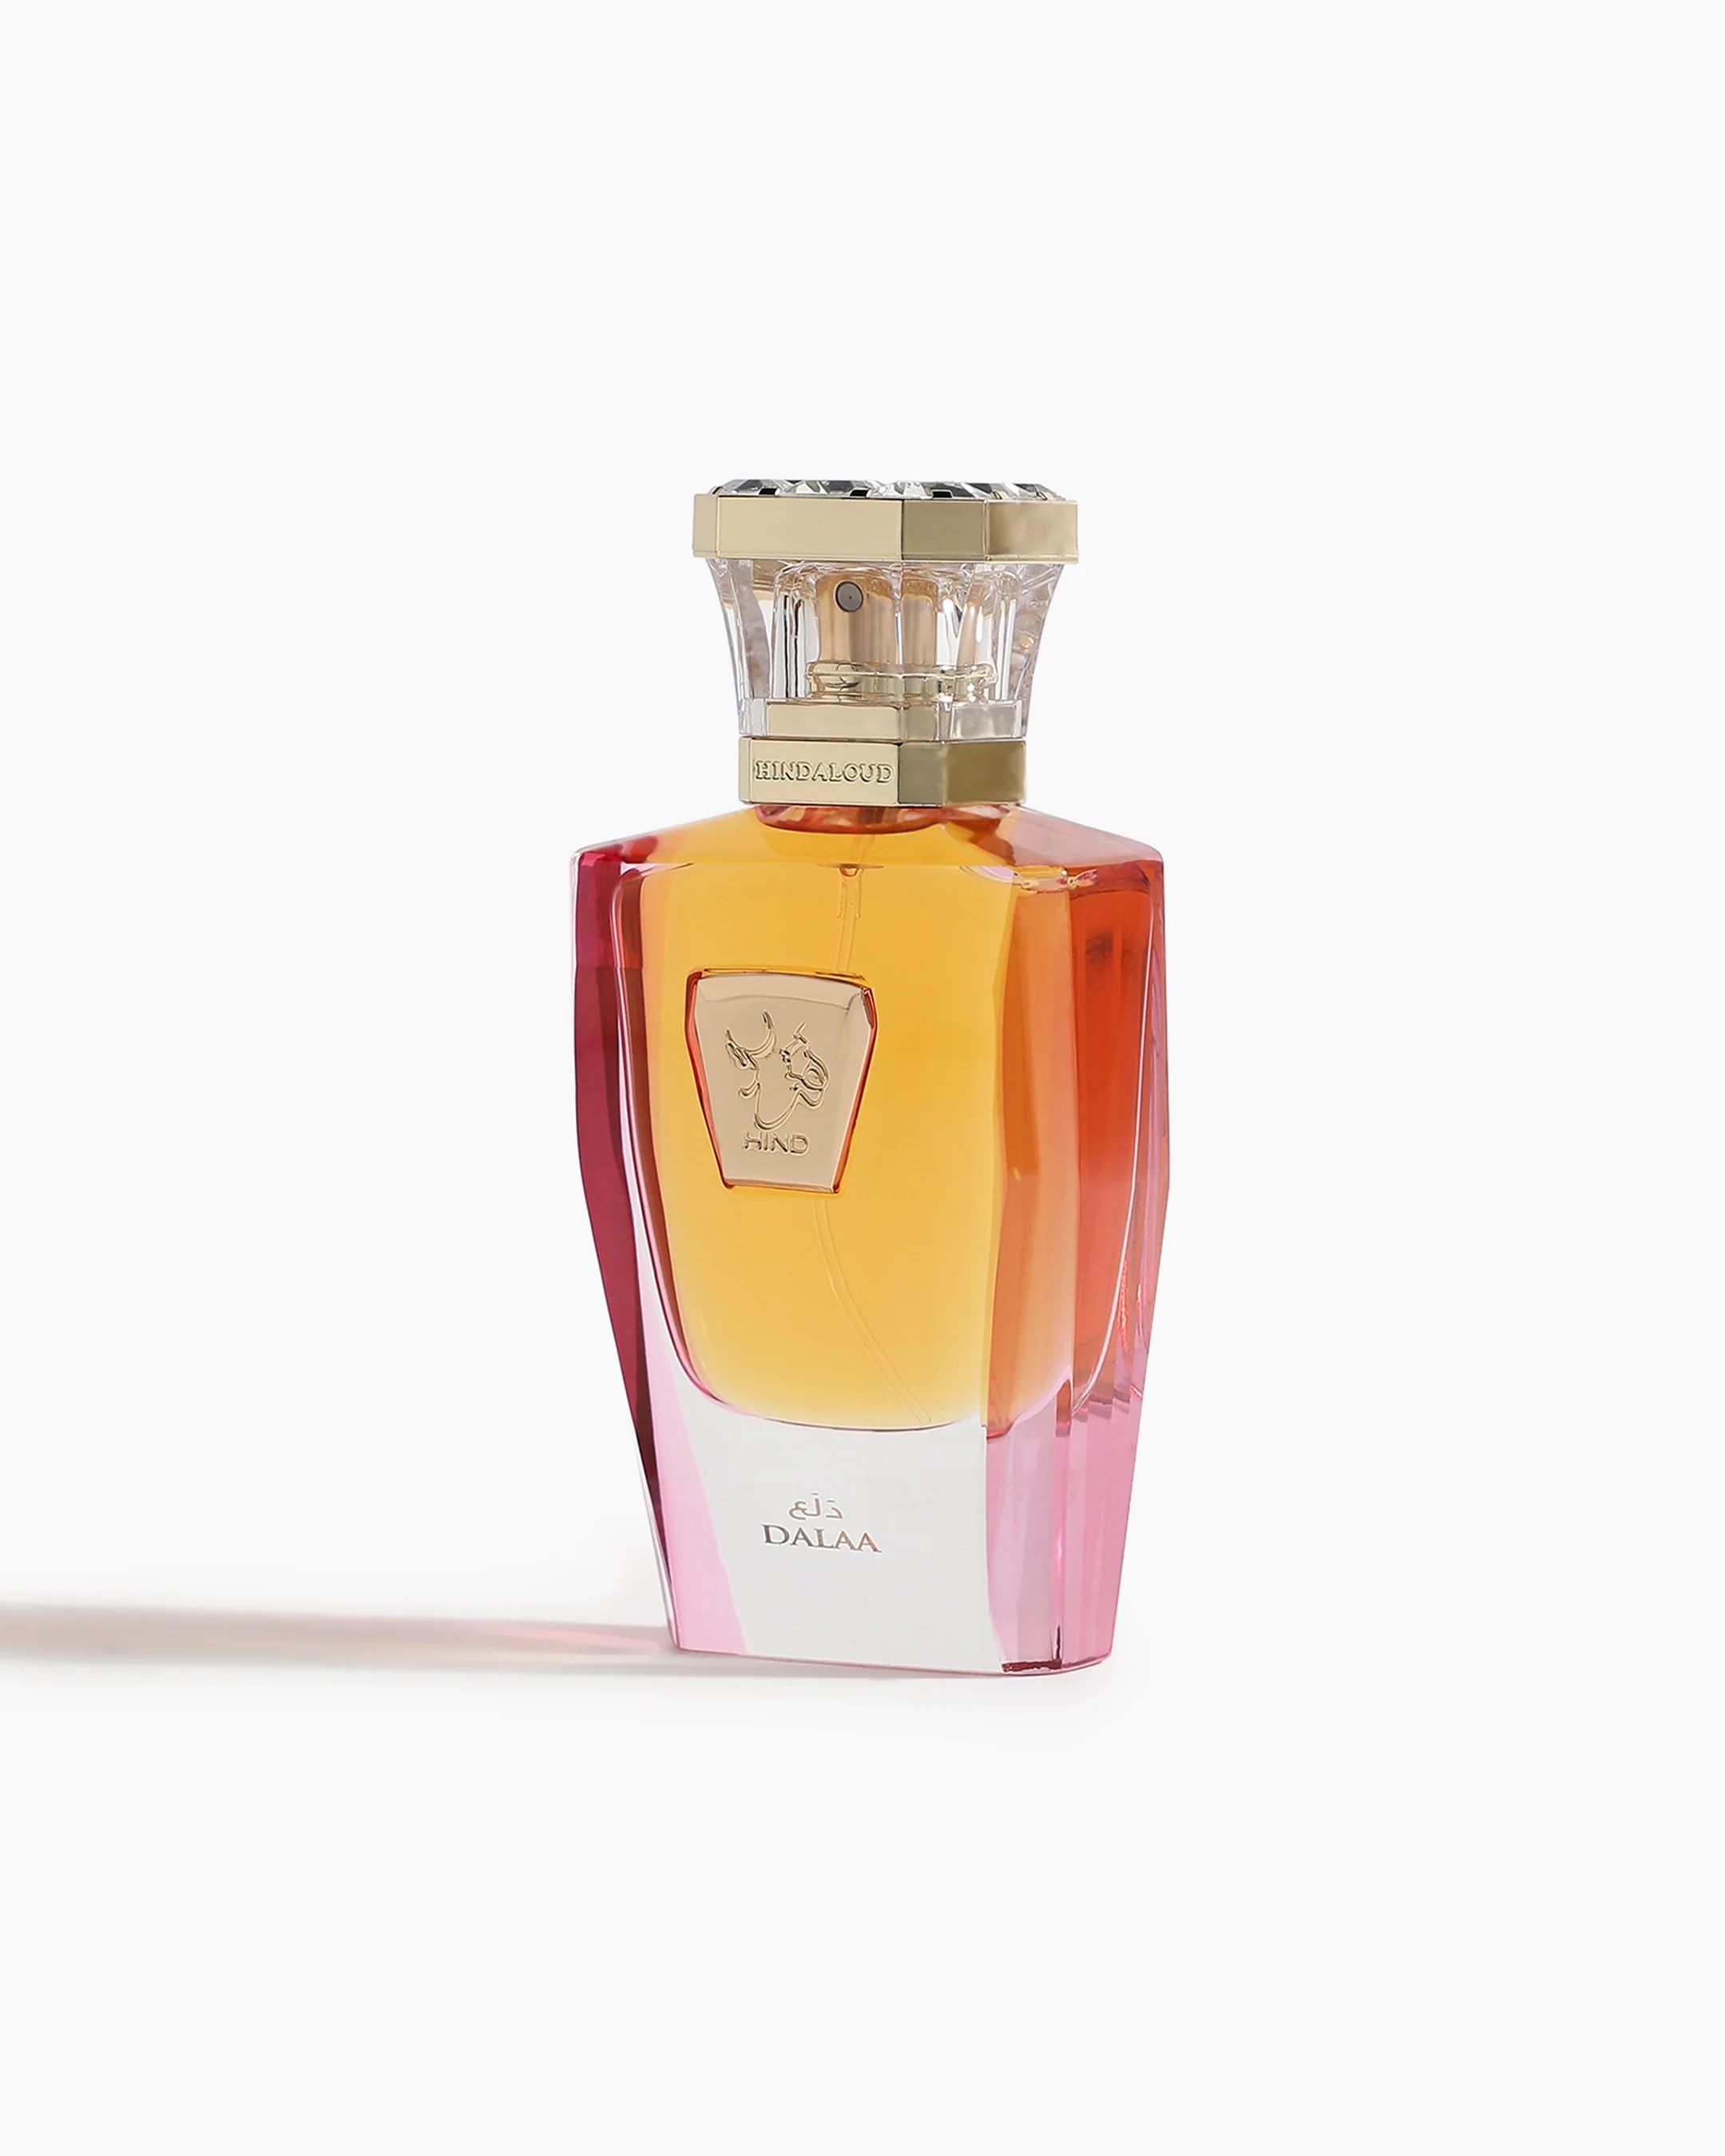 Dalaa Hind Al Oud perfume - a fragrance for women and men 2017